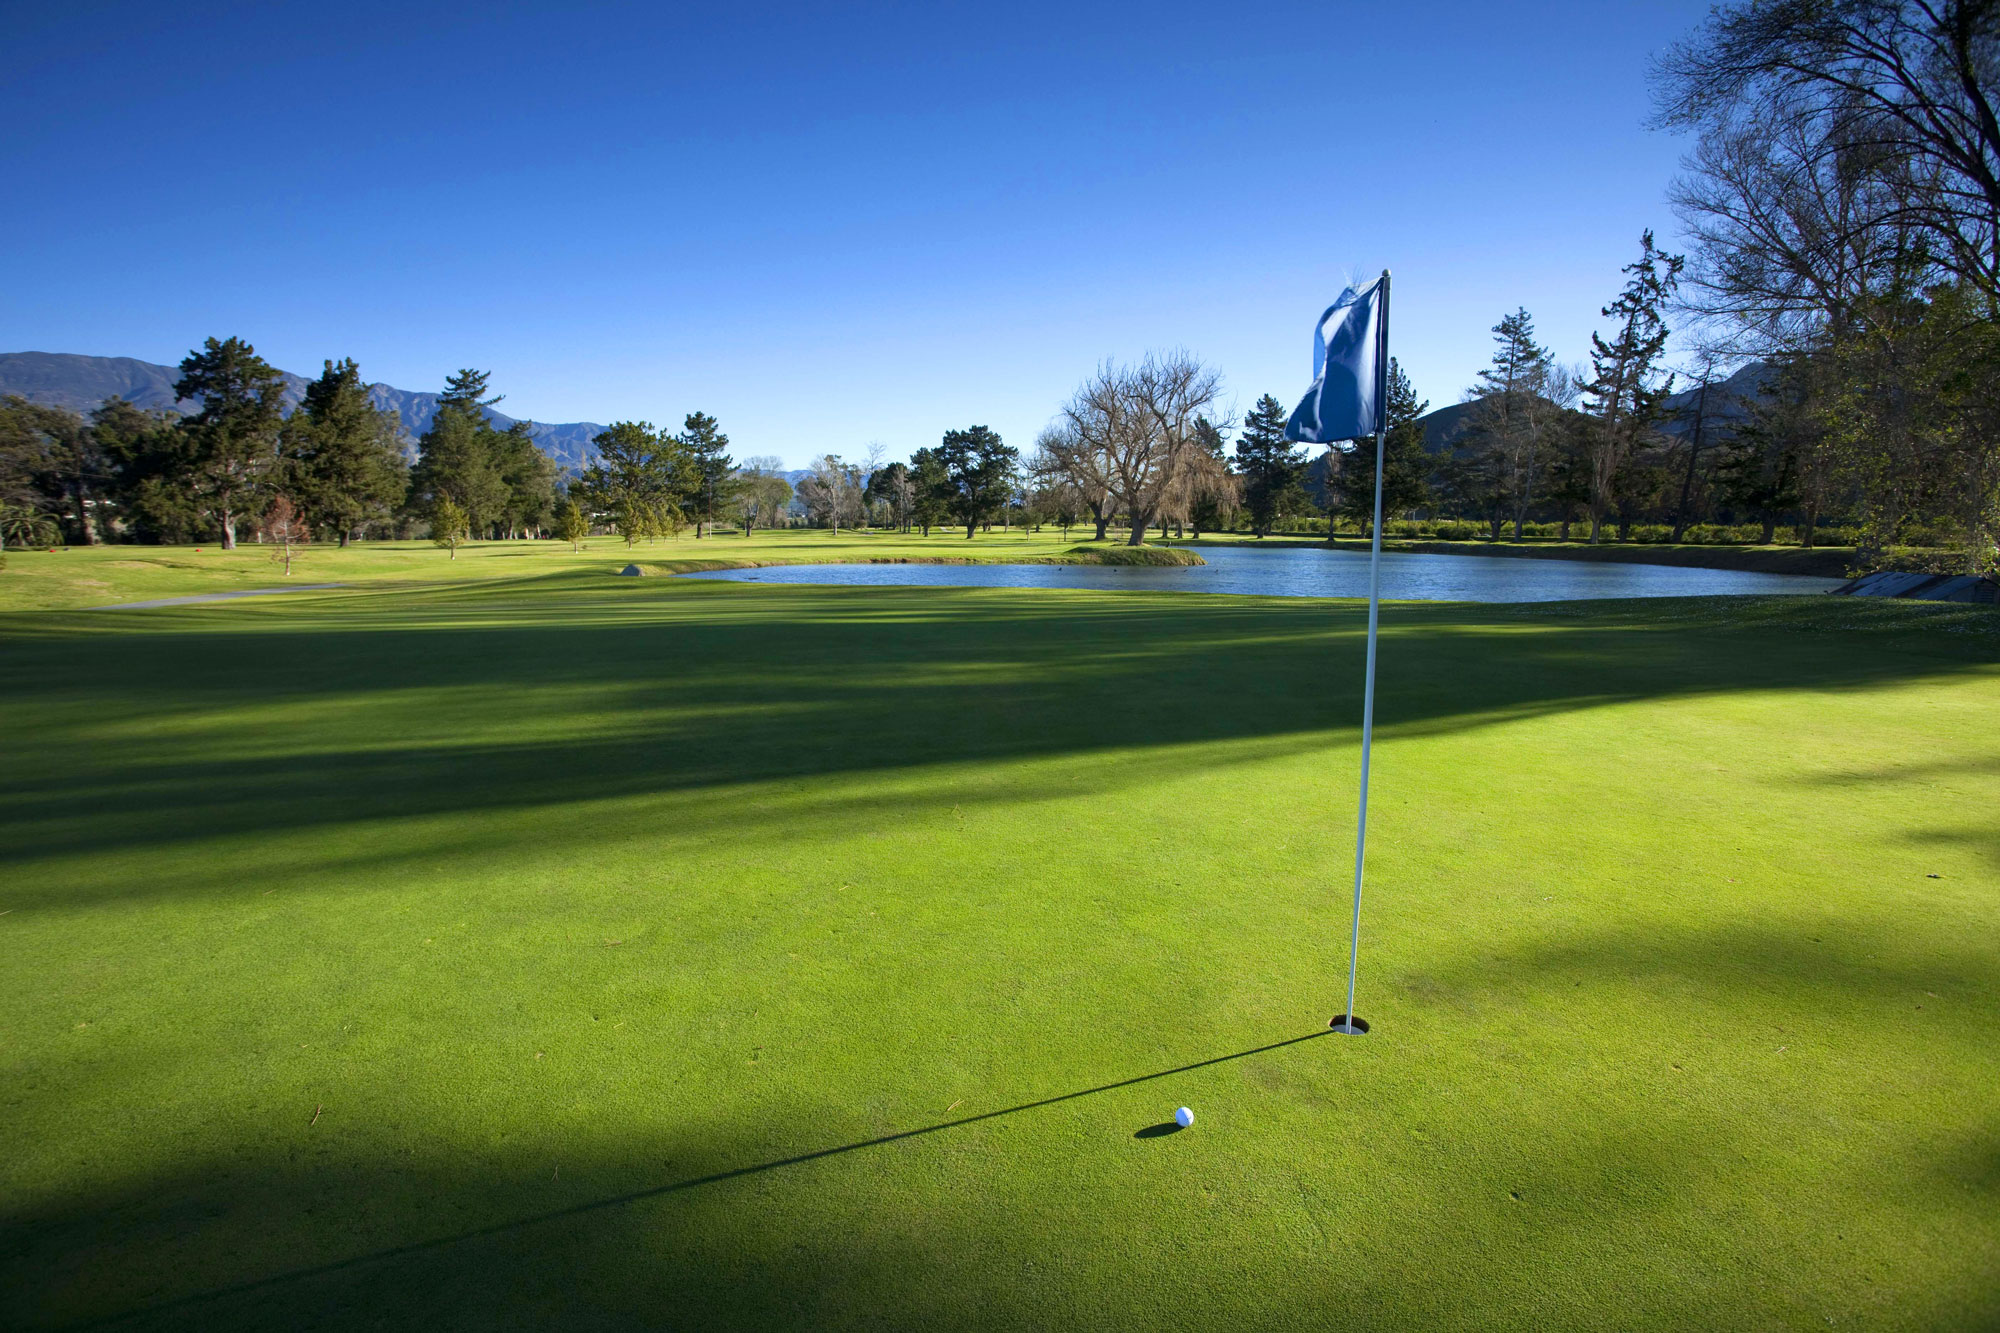 Golf Course Backgrounds, Compatible - PC, Mobile, Gadgets| 2000x1333 px